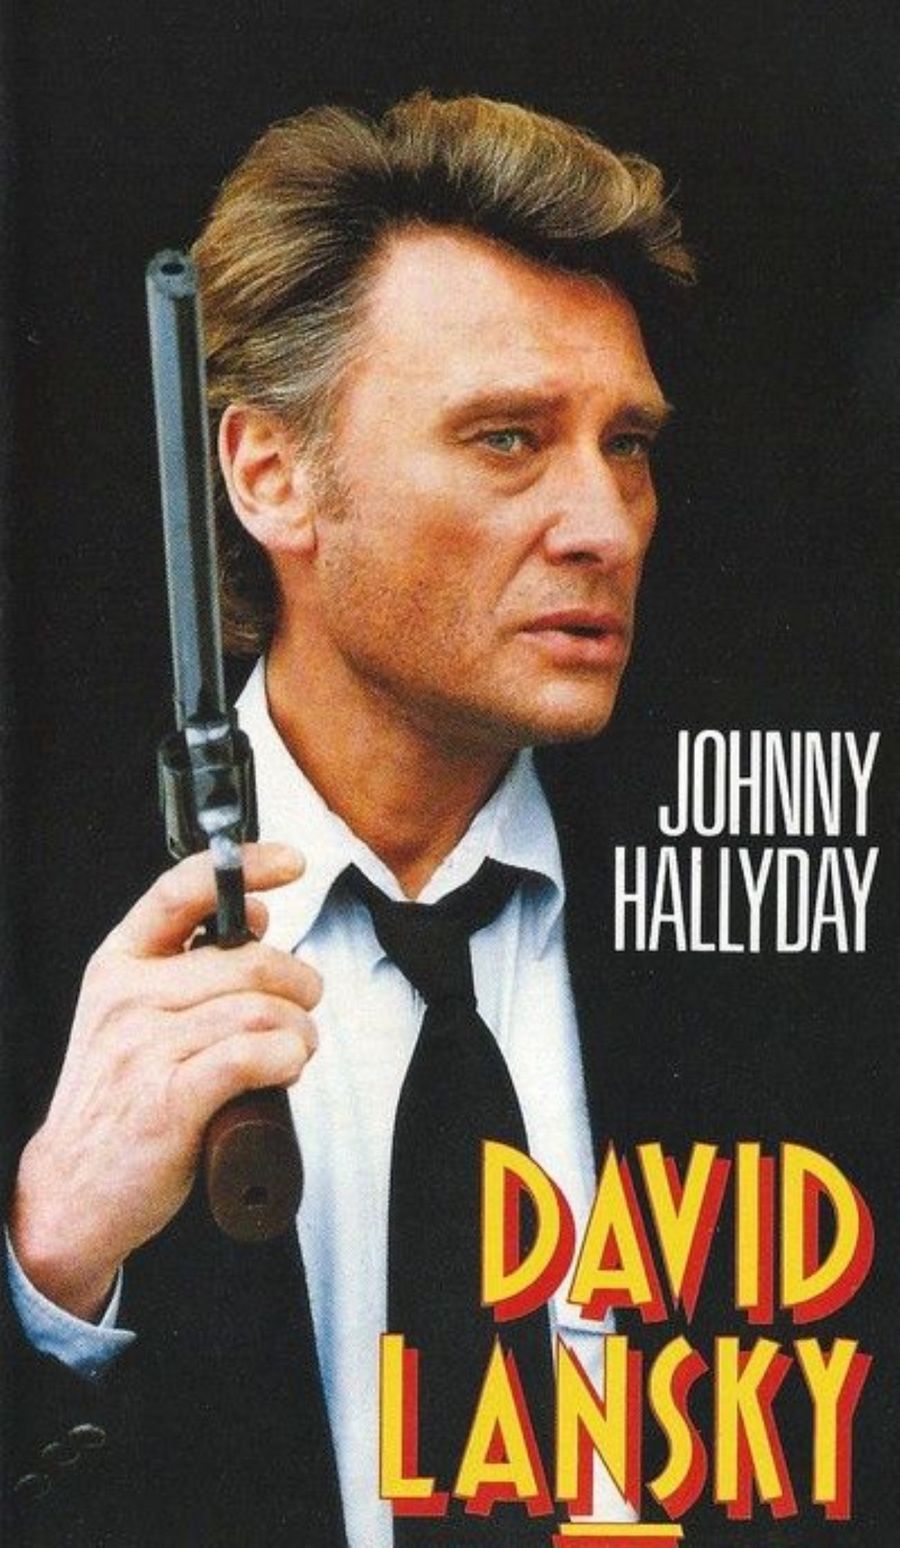 LES FILMS DE JOHNNY 'DAVID LANSKY' 1989 0357